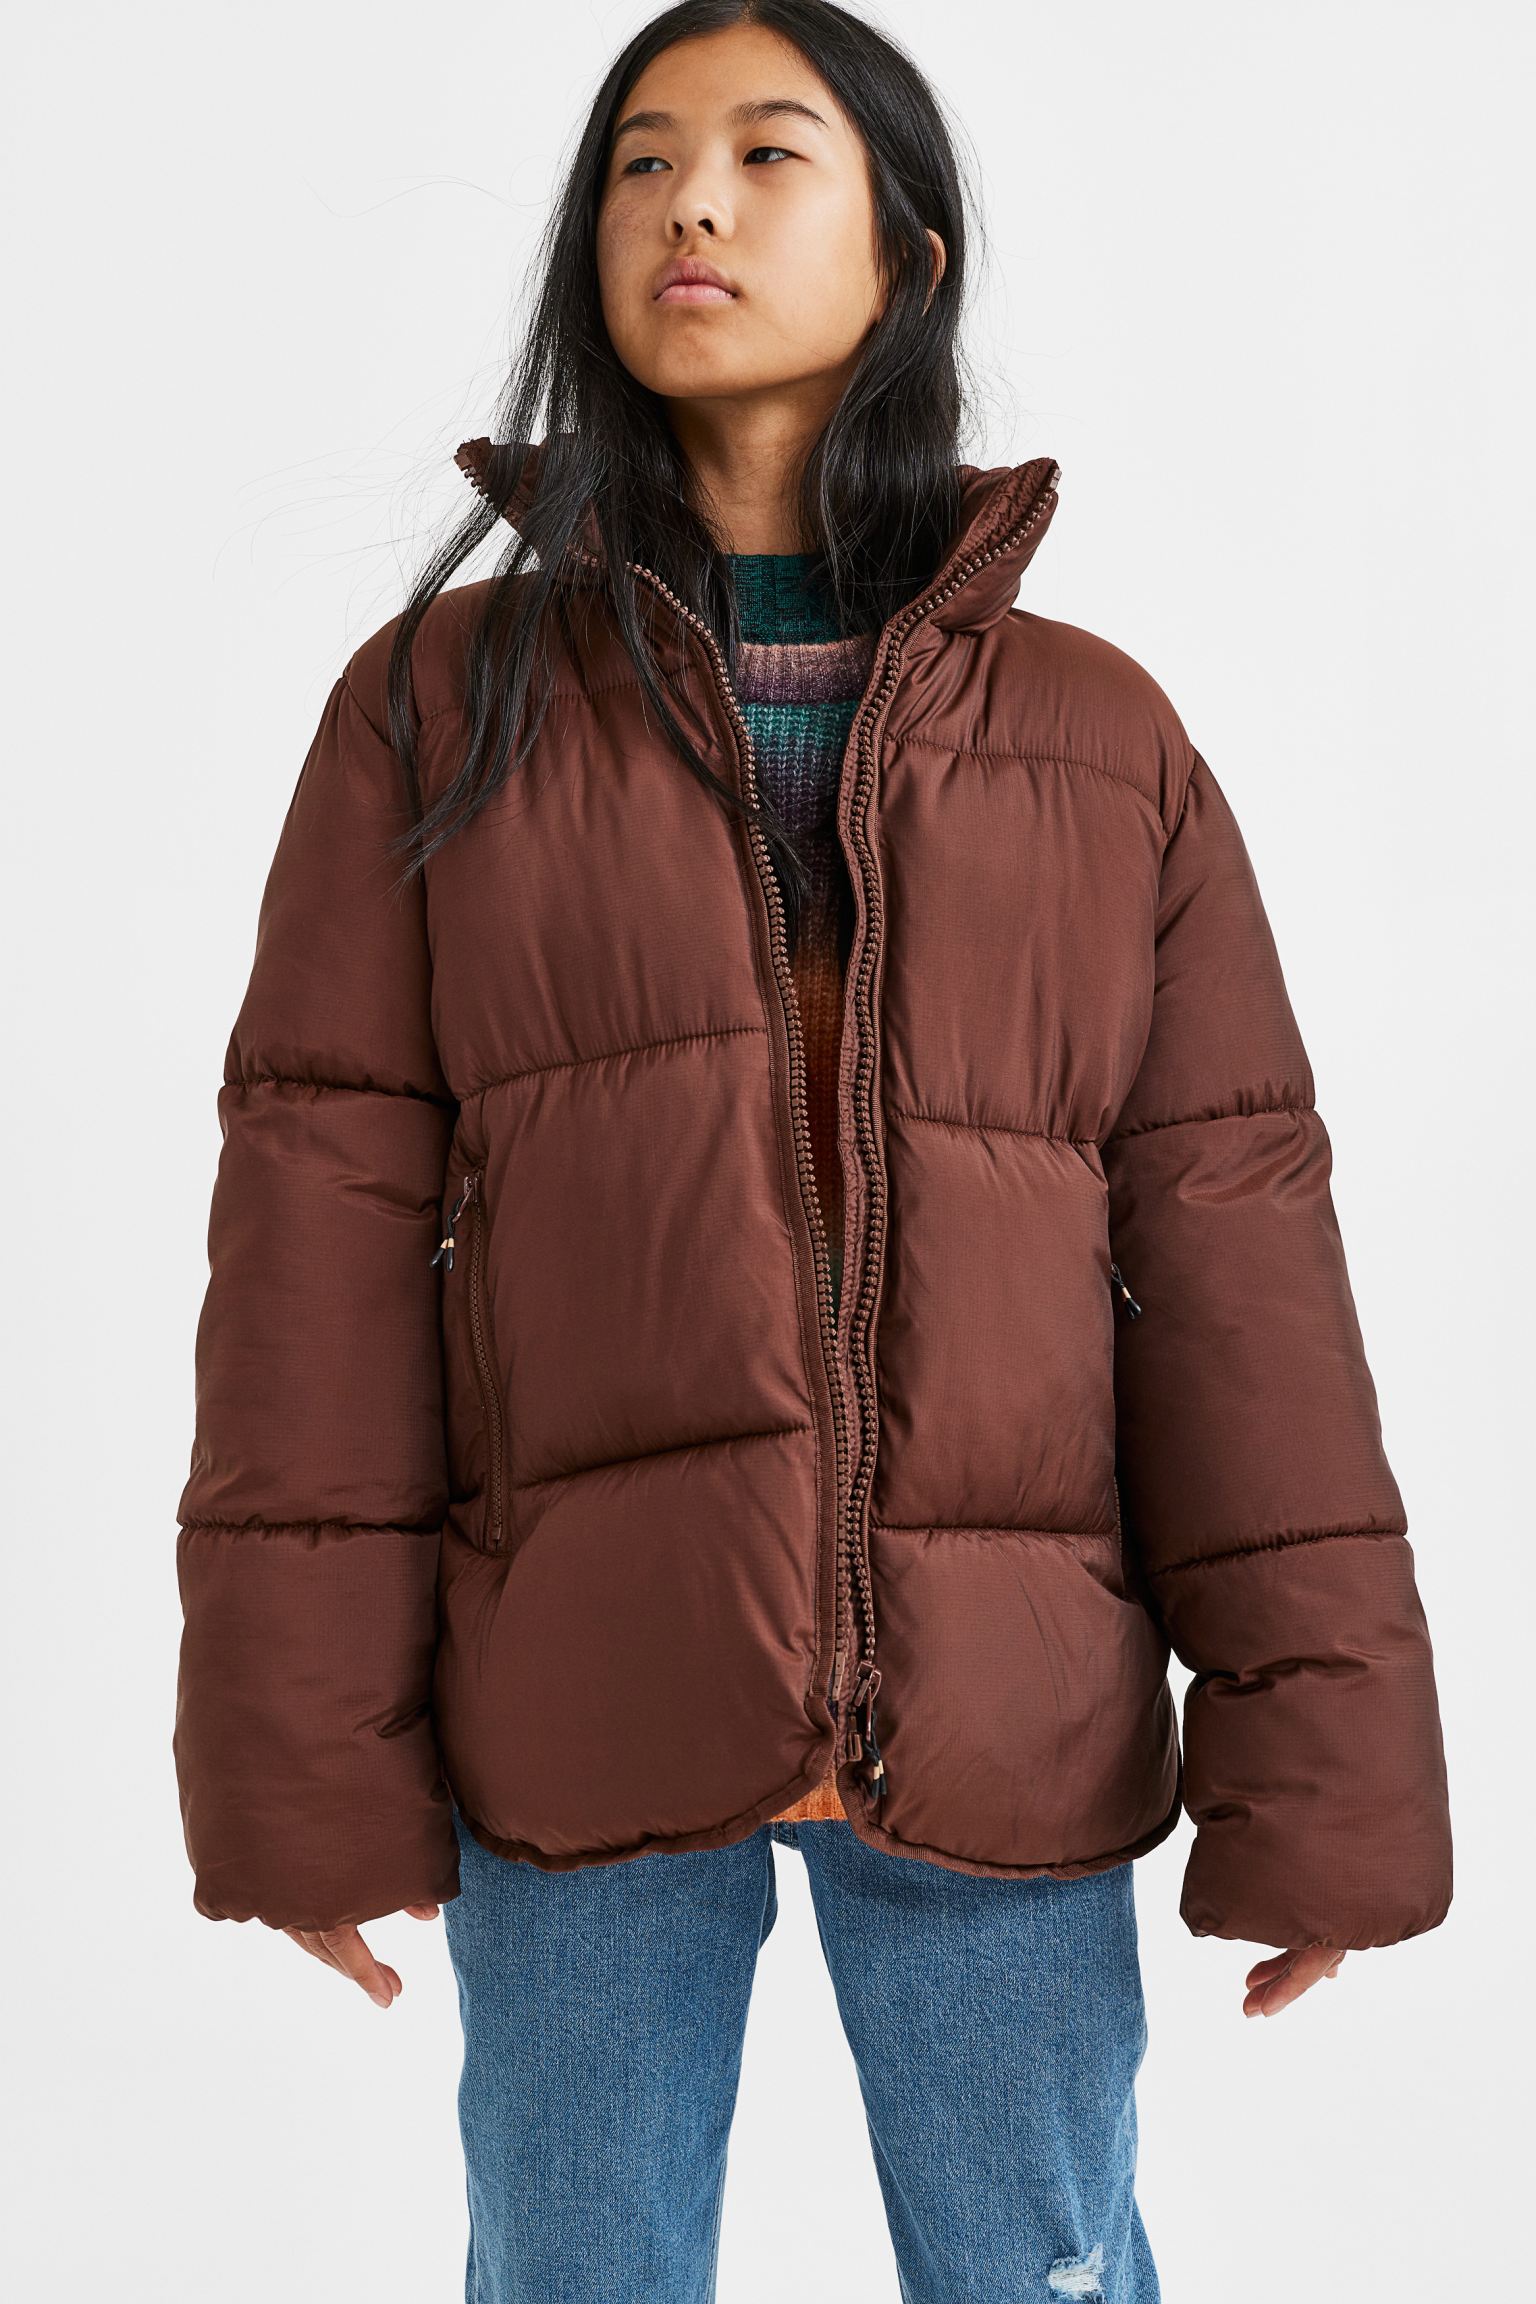 Куртка H&M для девочек, коричневый-002, размер 158, 1098341002 пуховик женский mountain hardwear ghost whisperer 2™ jacket коричневый